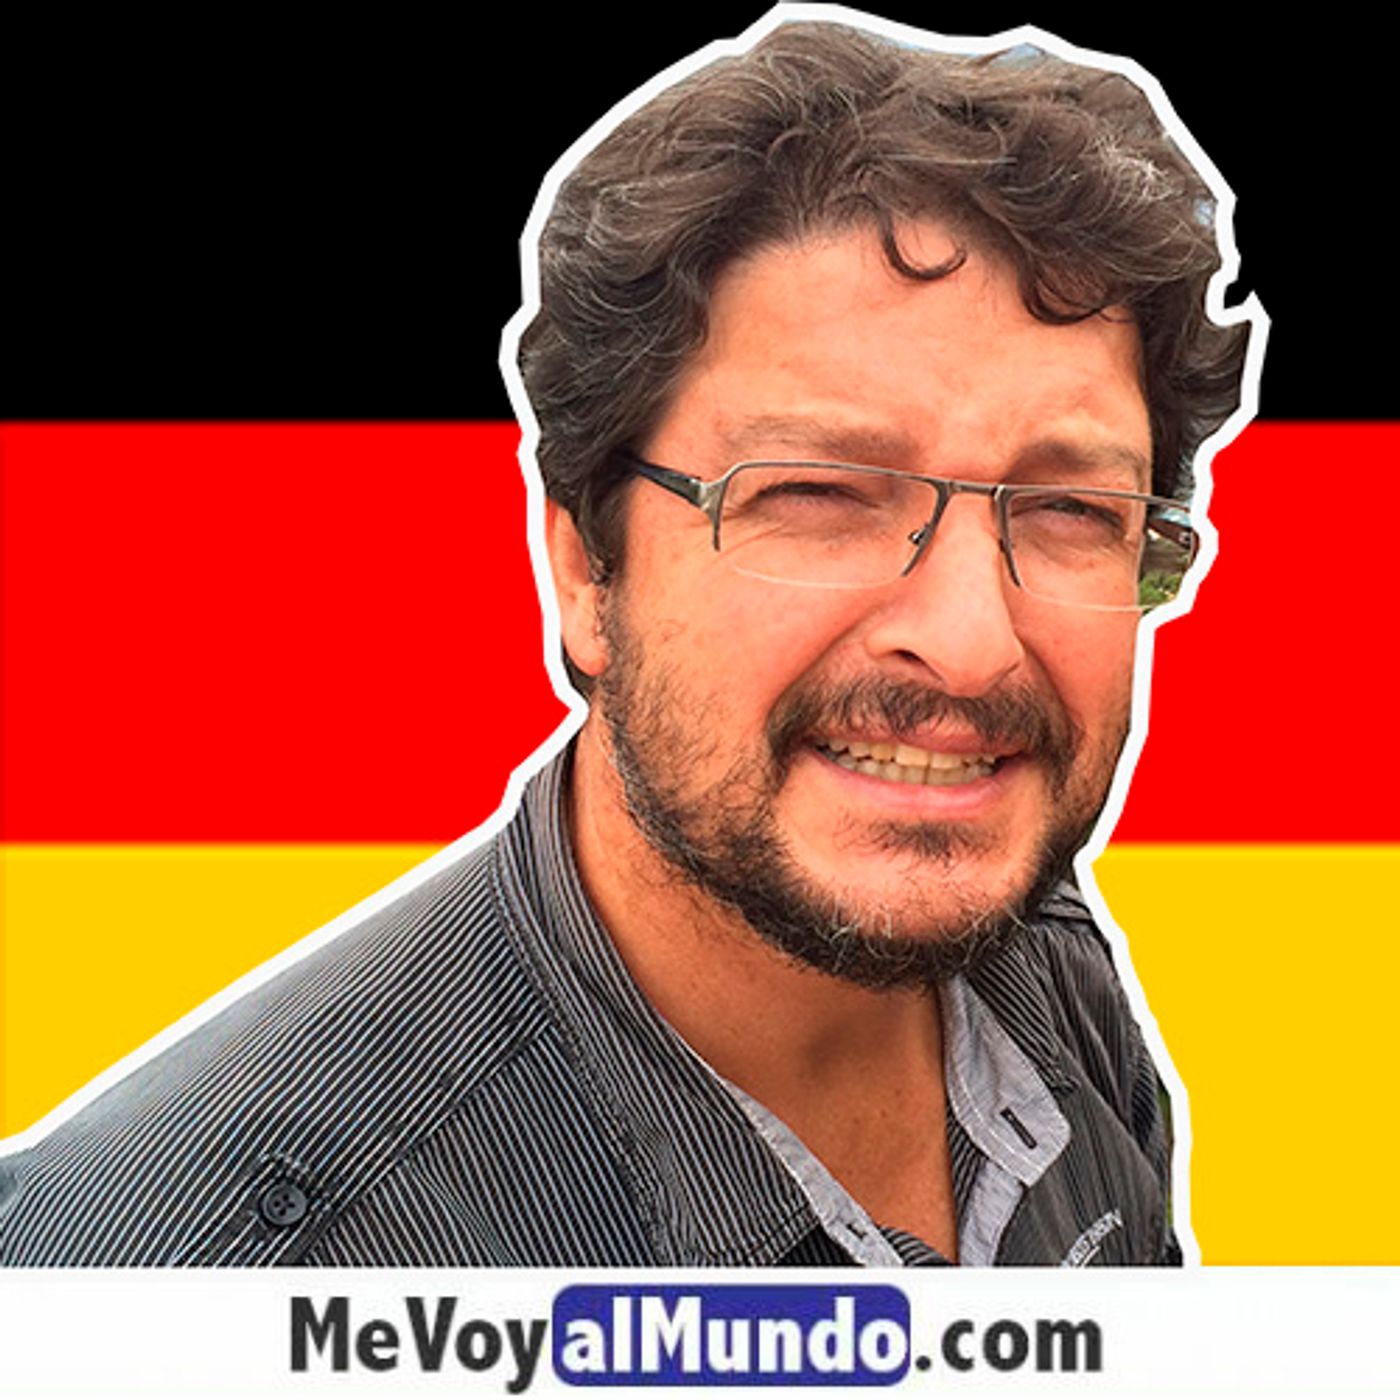 Profesor de español en Alemania